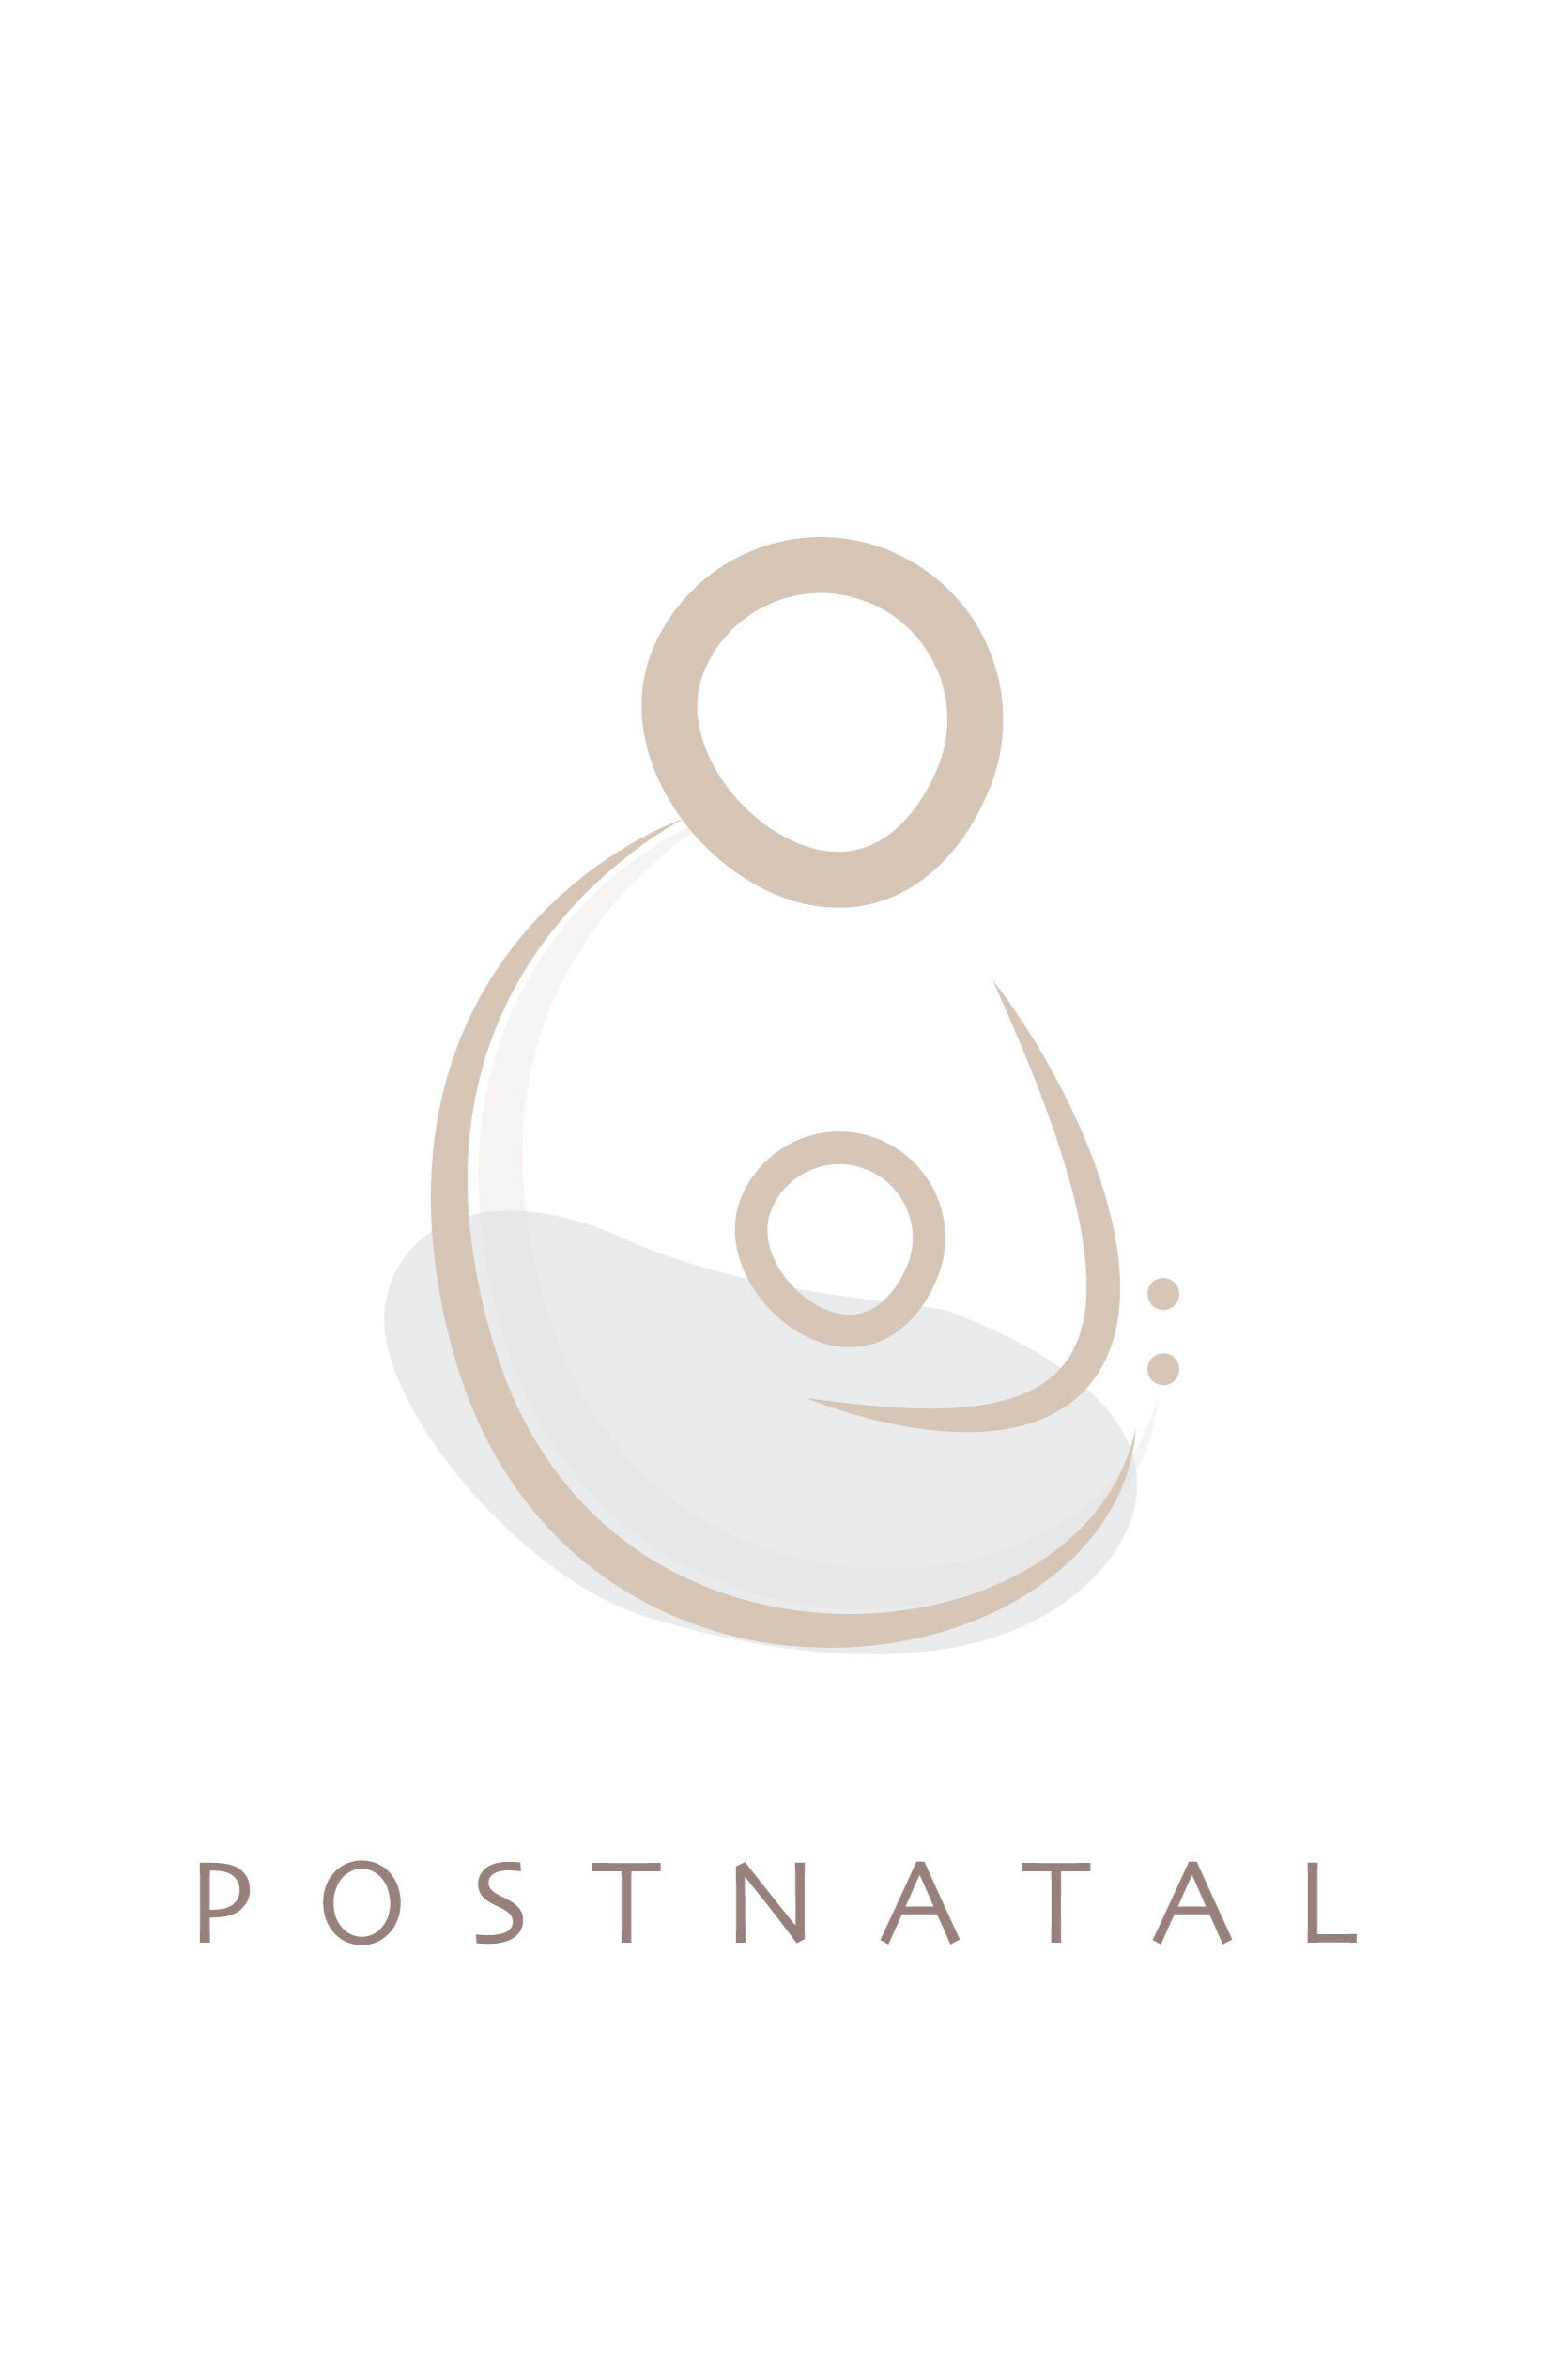 Icones-postnatal.jpg